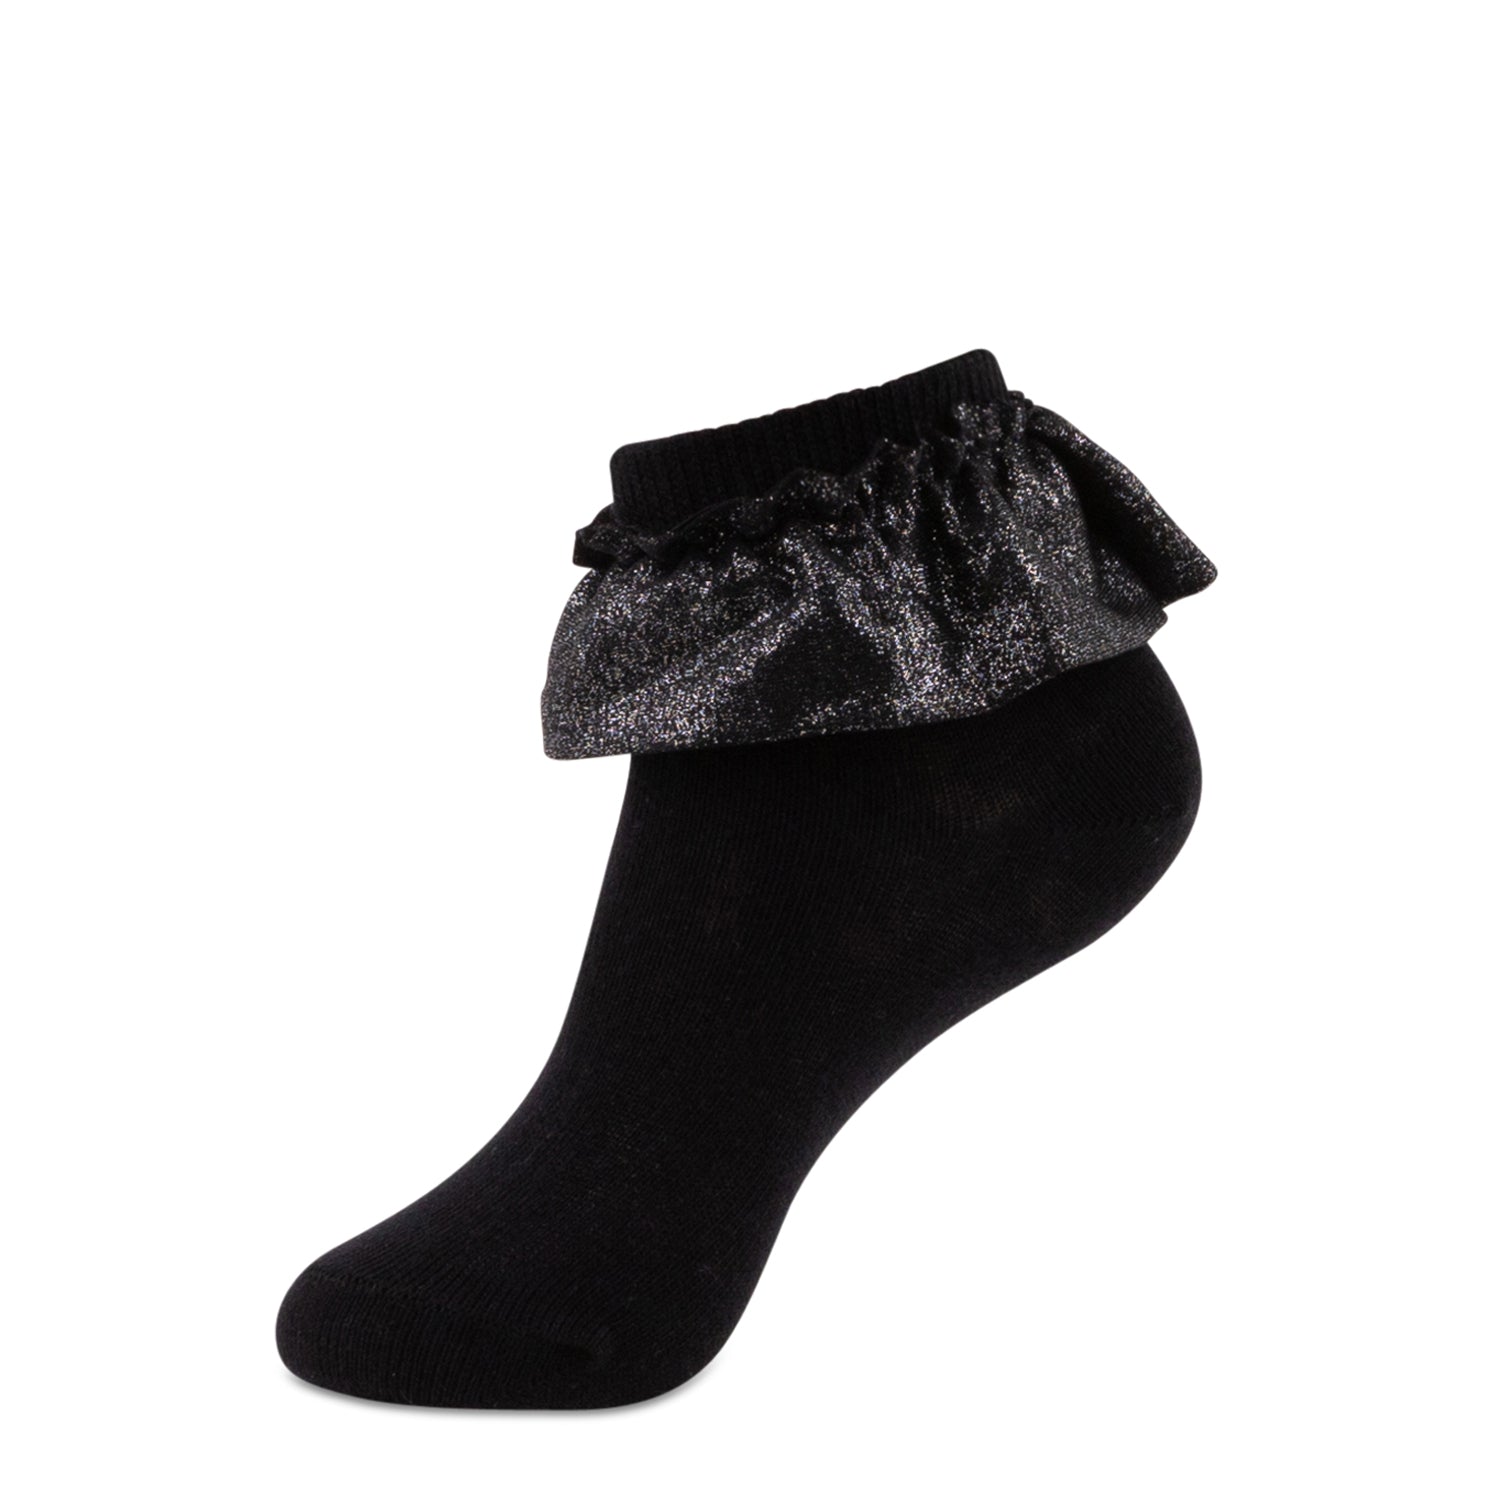 jrp socks black metallic lace anklet sock